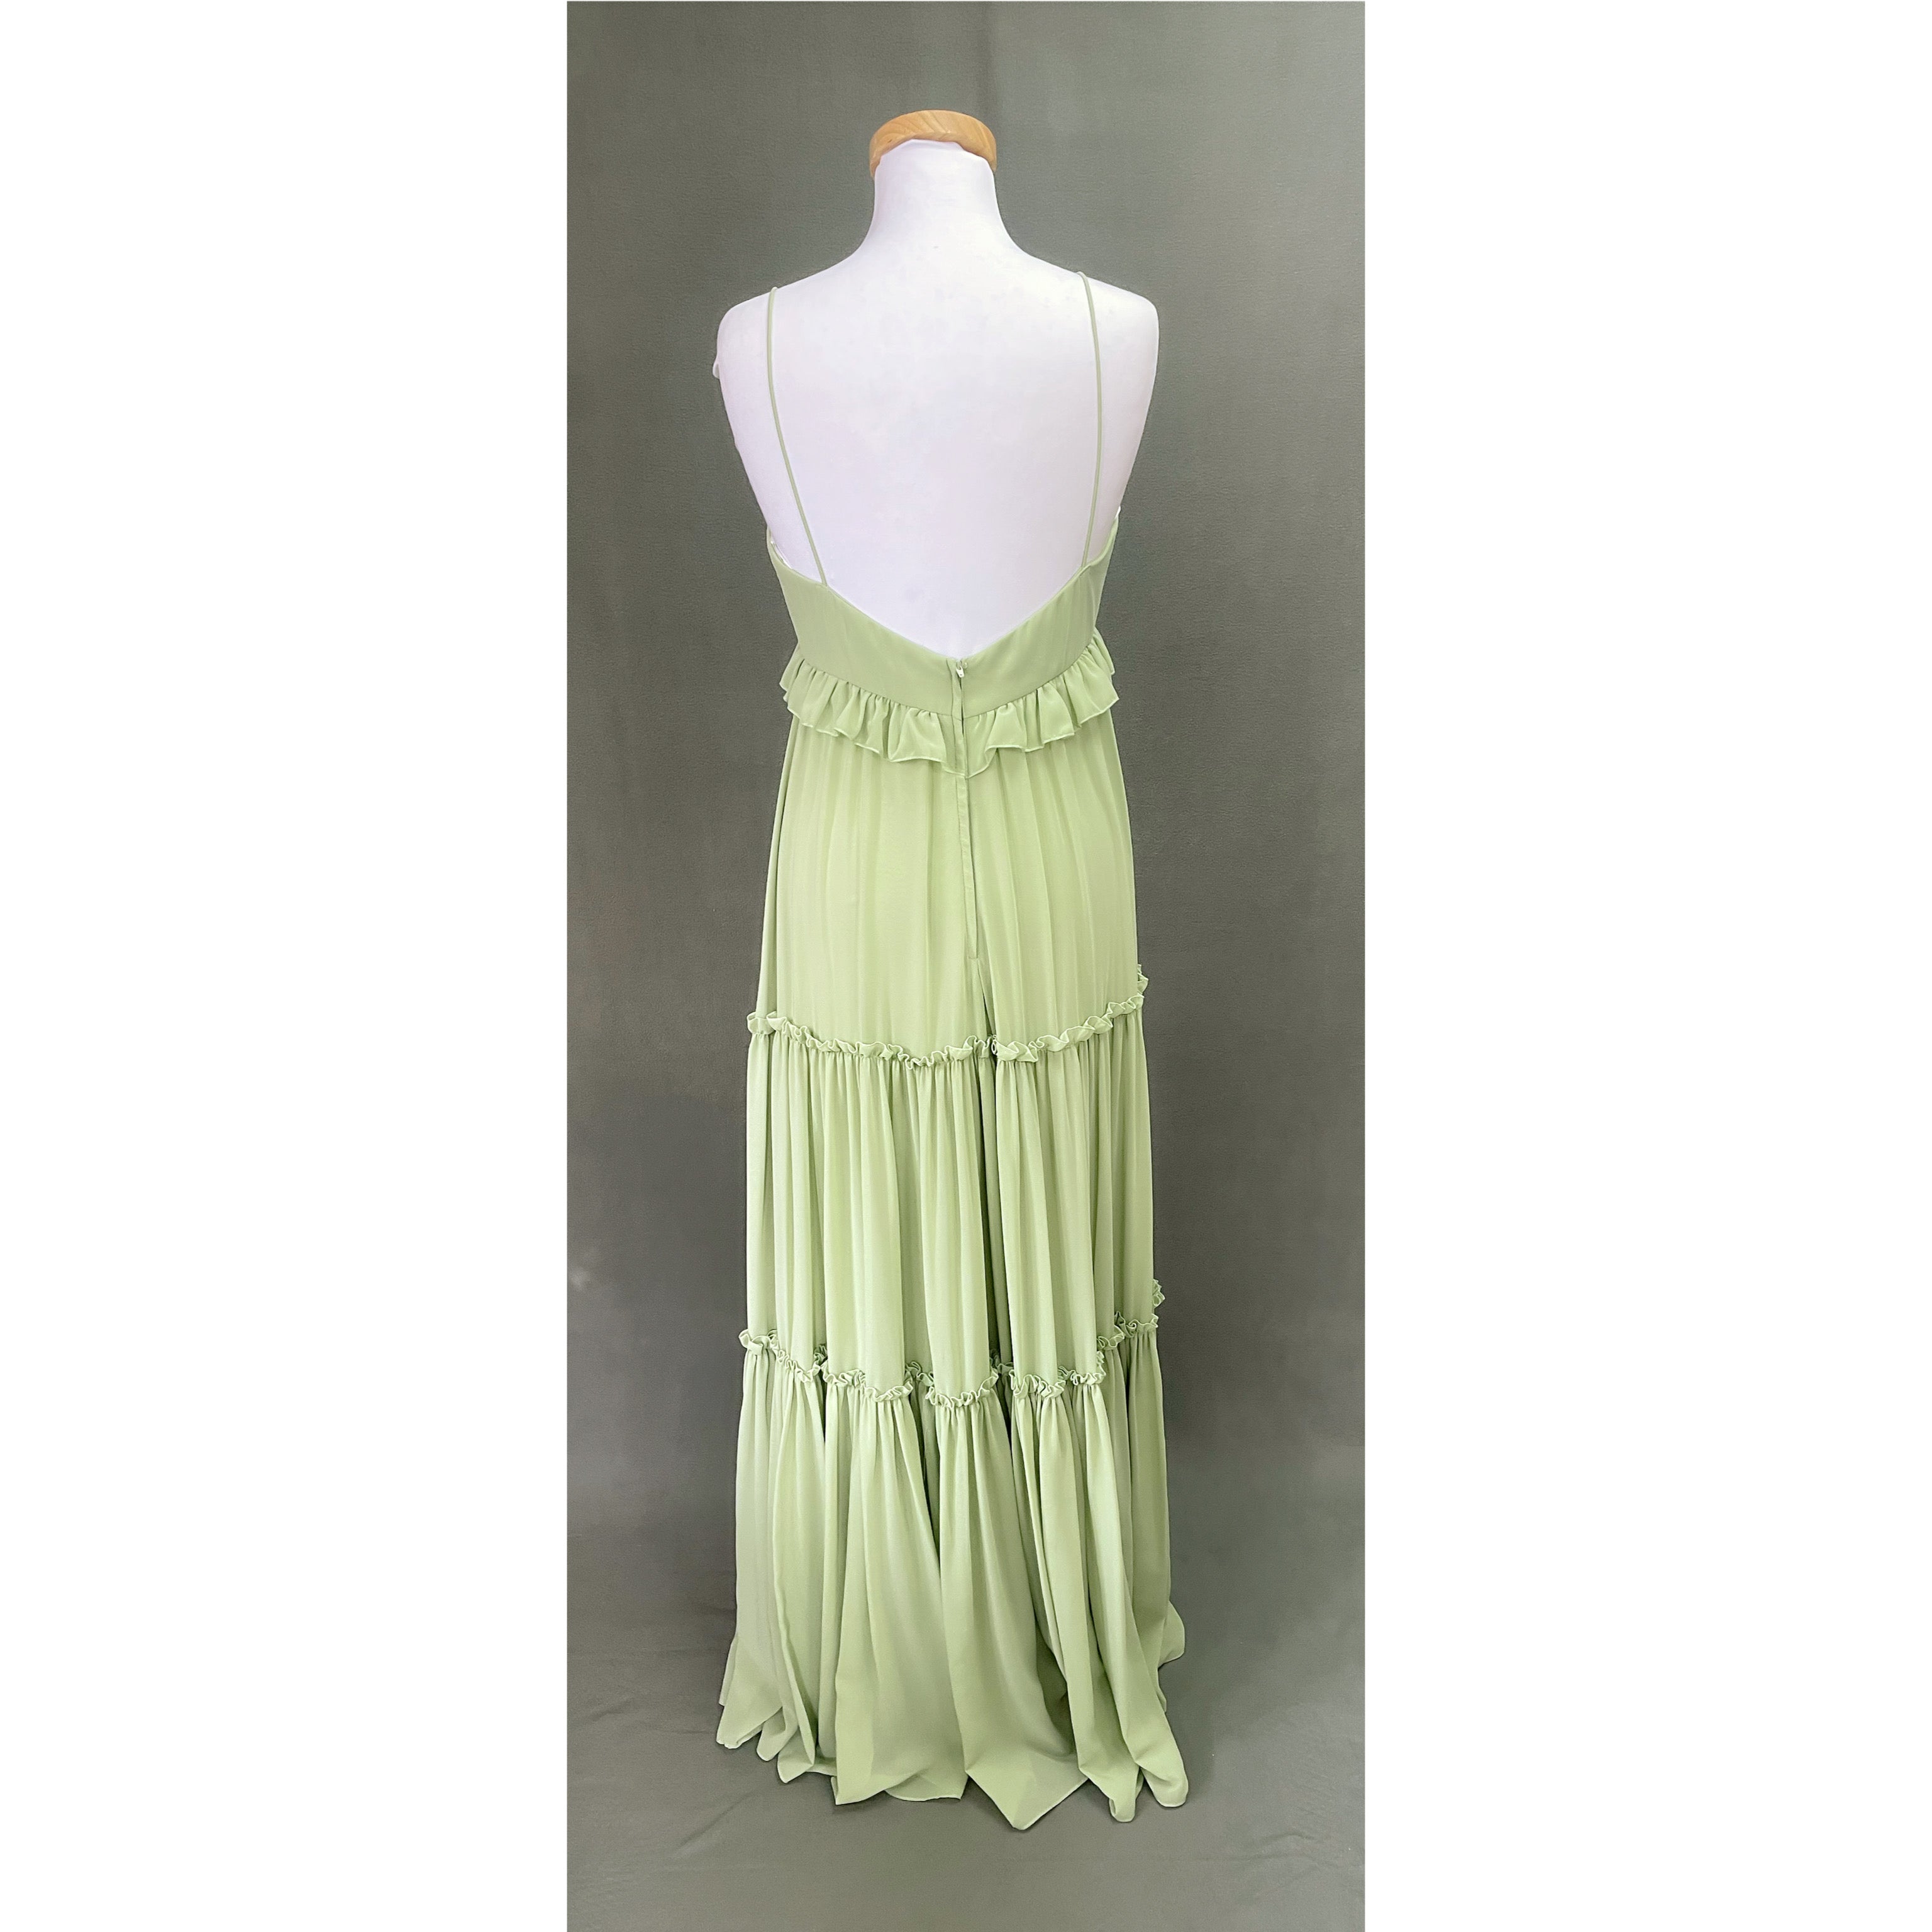 Sage dress, size 8